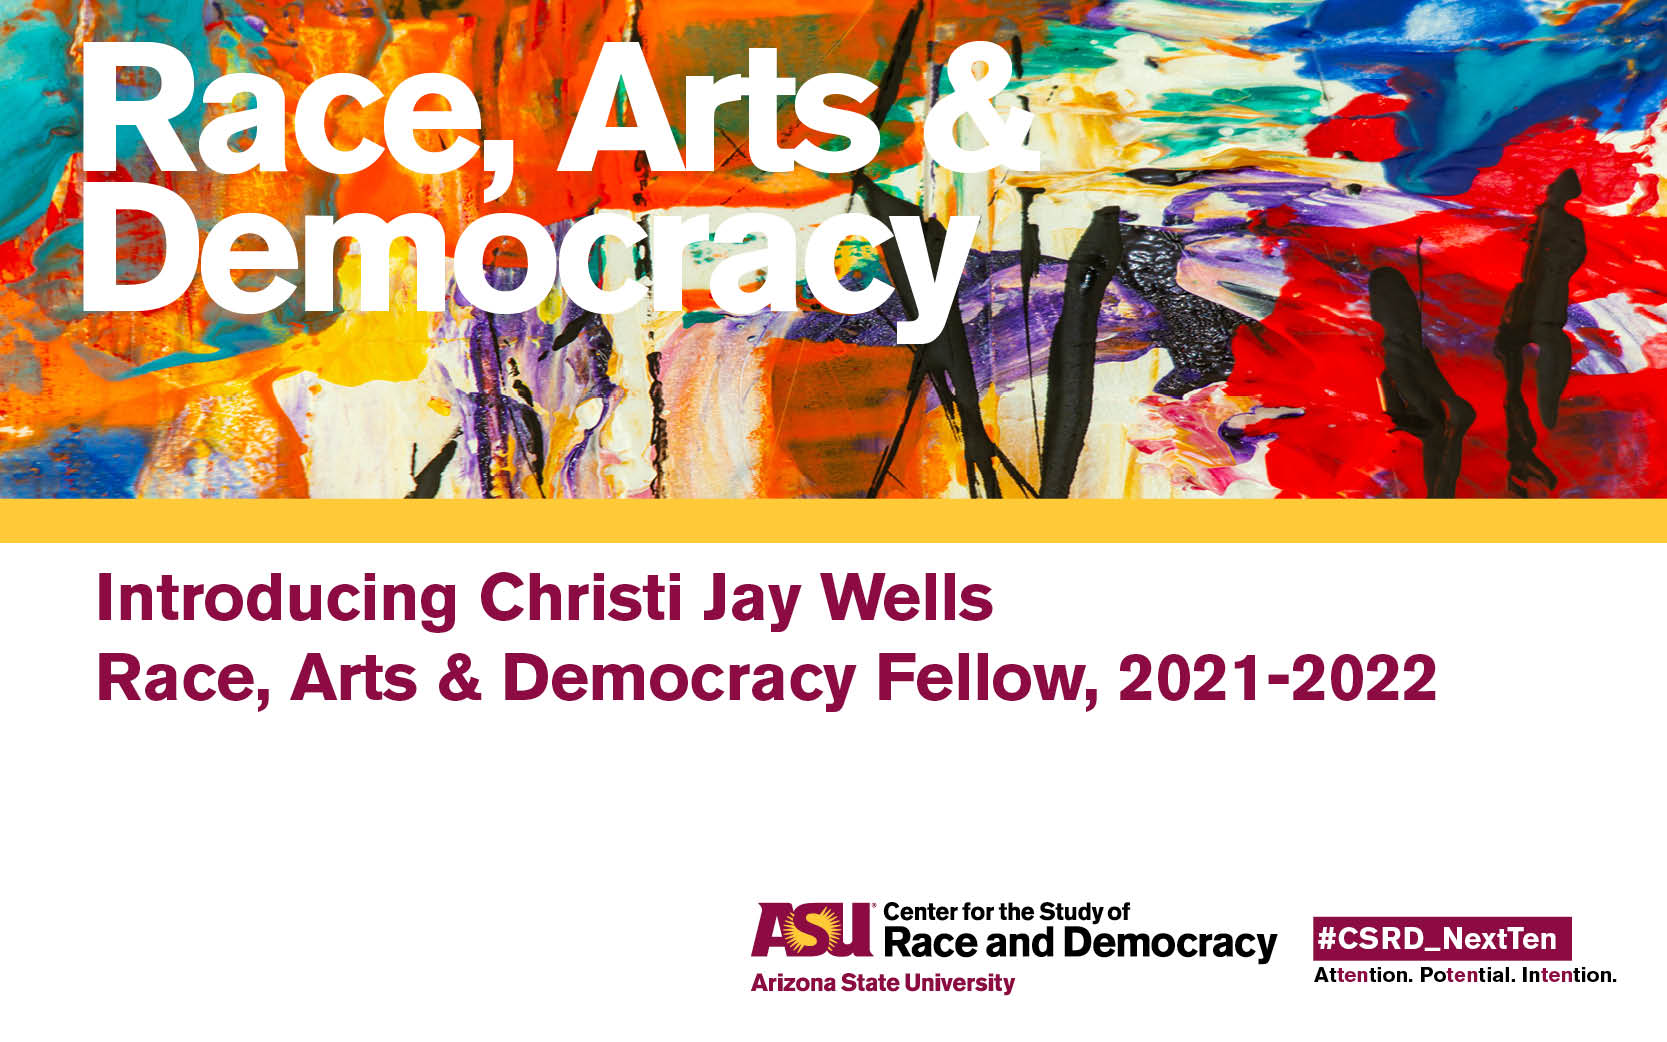 Race, arts and democracy